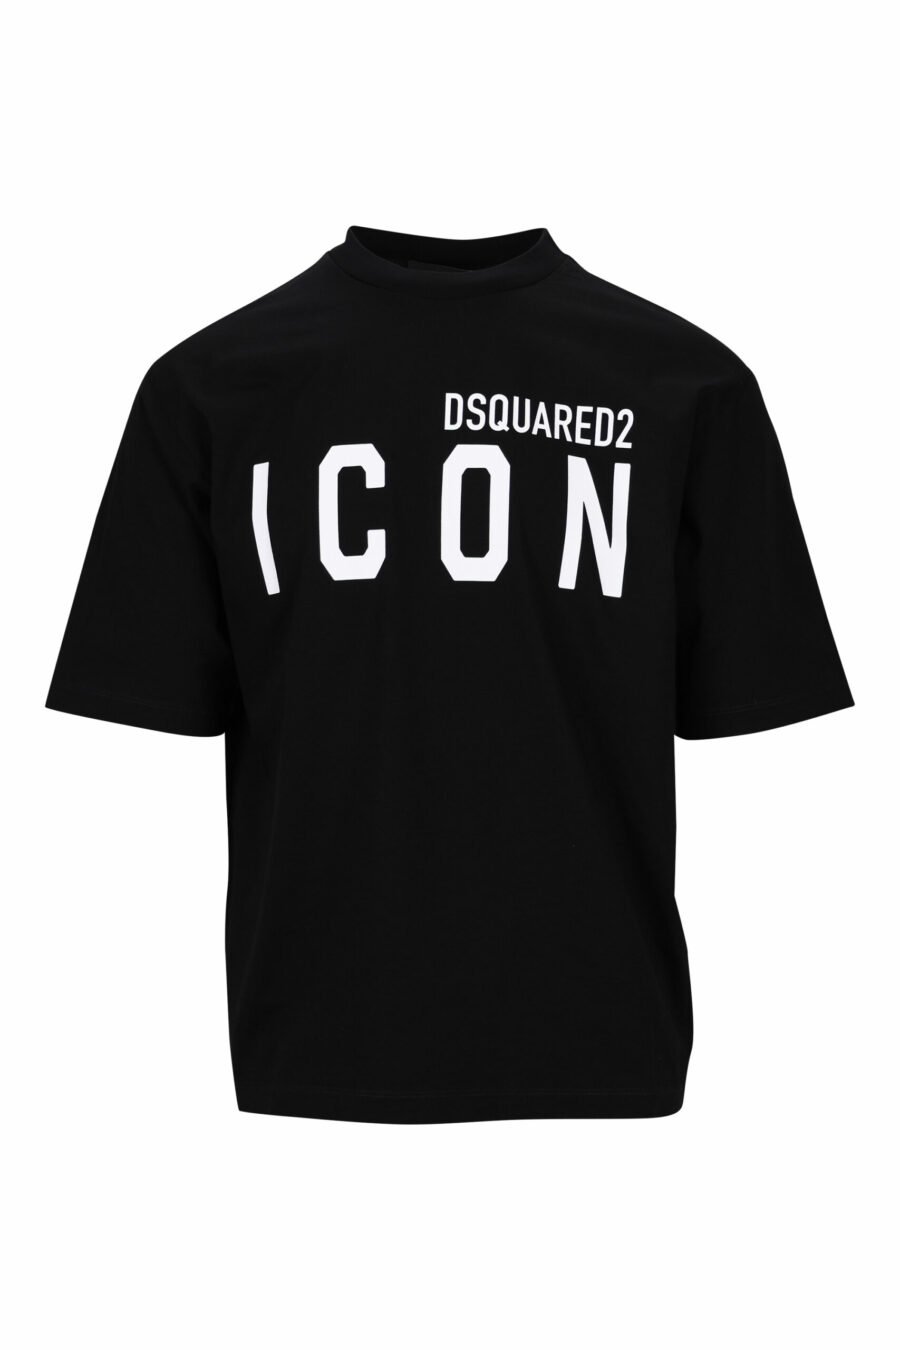 Camiseta negra "oversize" con maxilogo "icon" blanco - 8054148357405 scaled